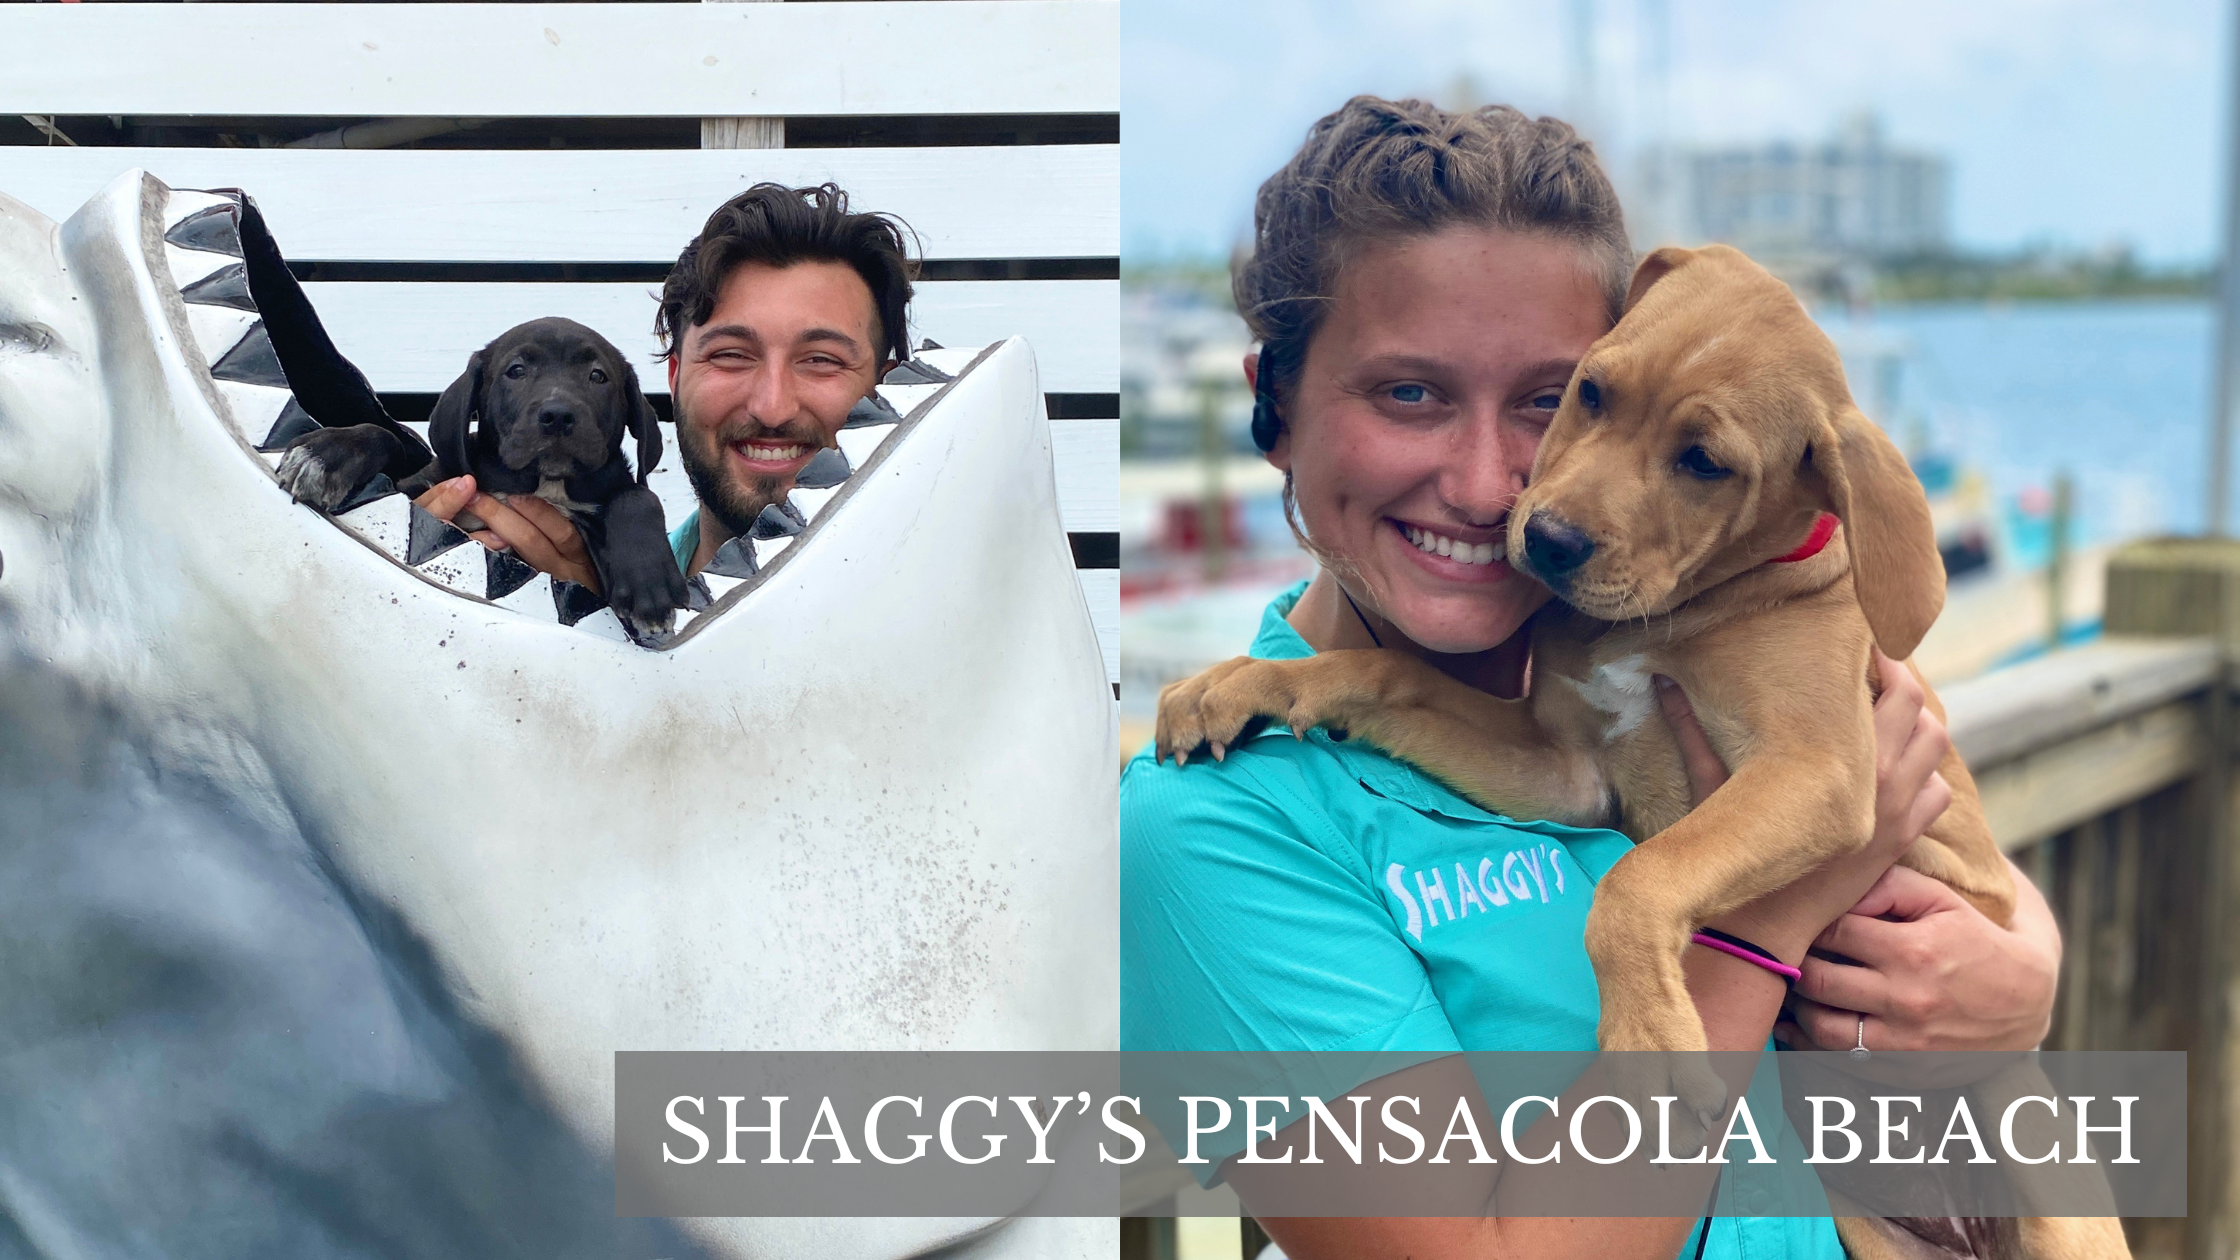 Shaggy's Pensacola Beach dog friendly restaurant